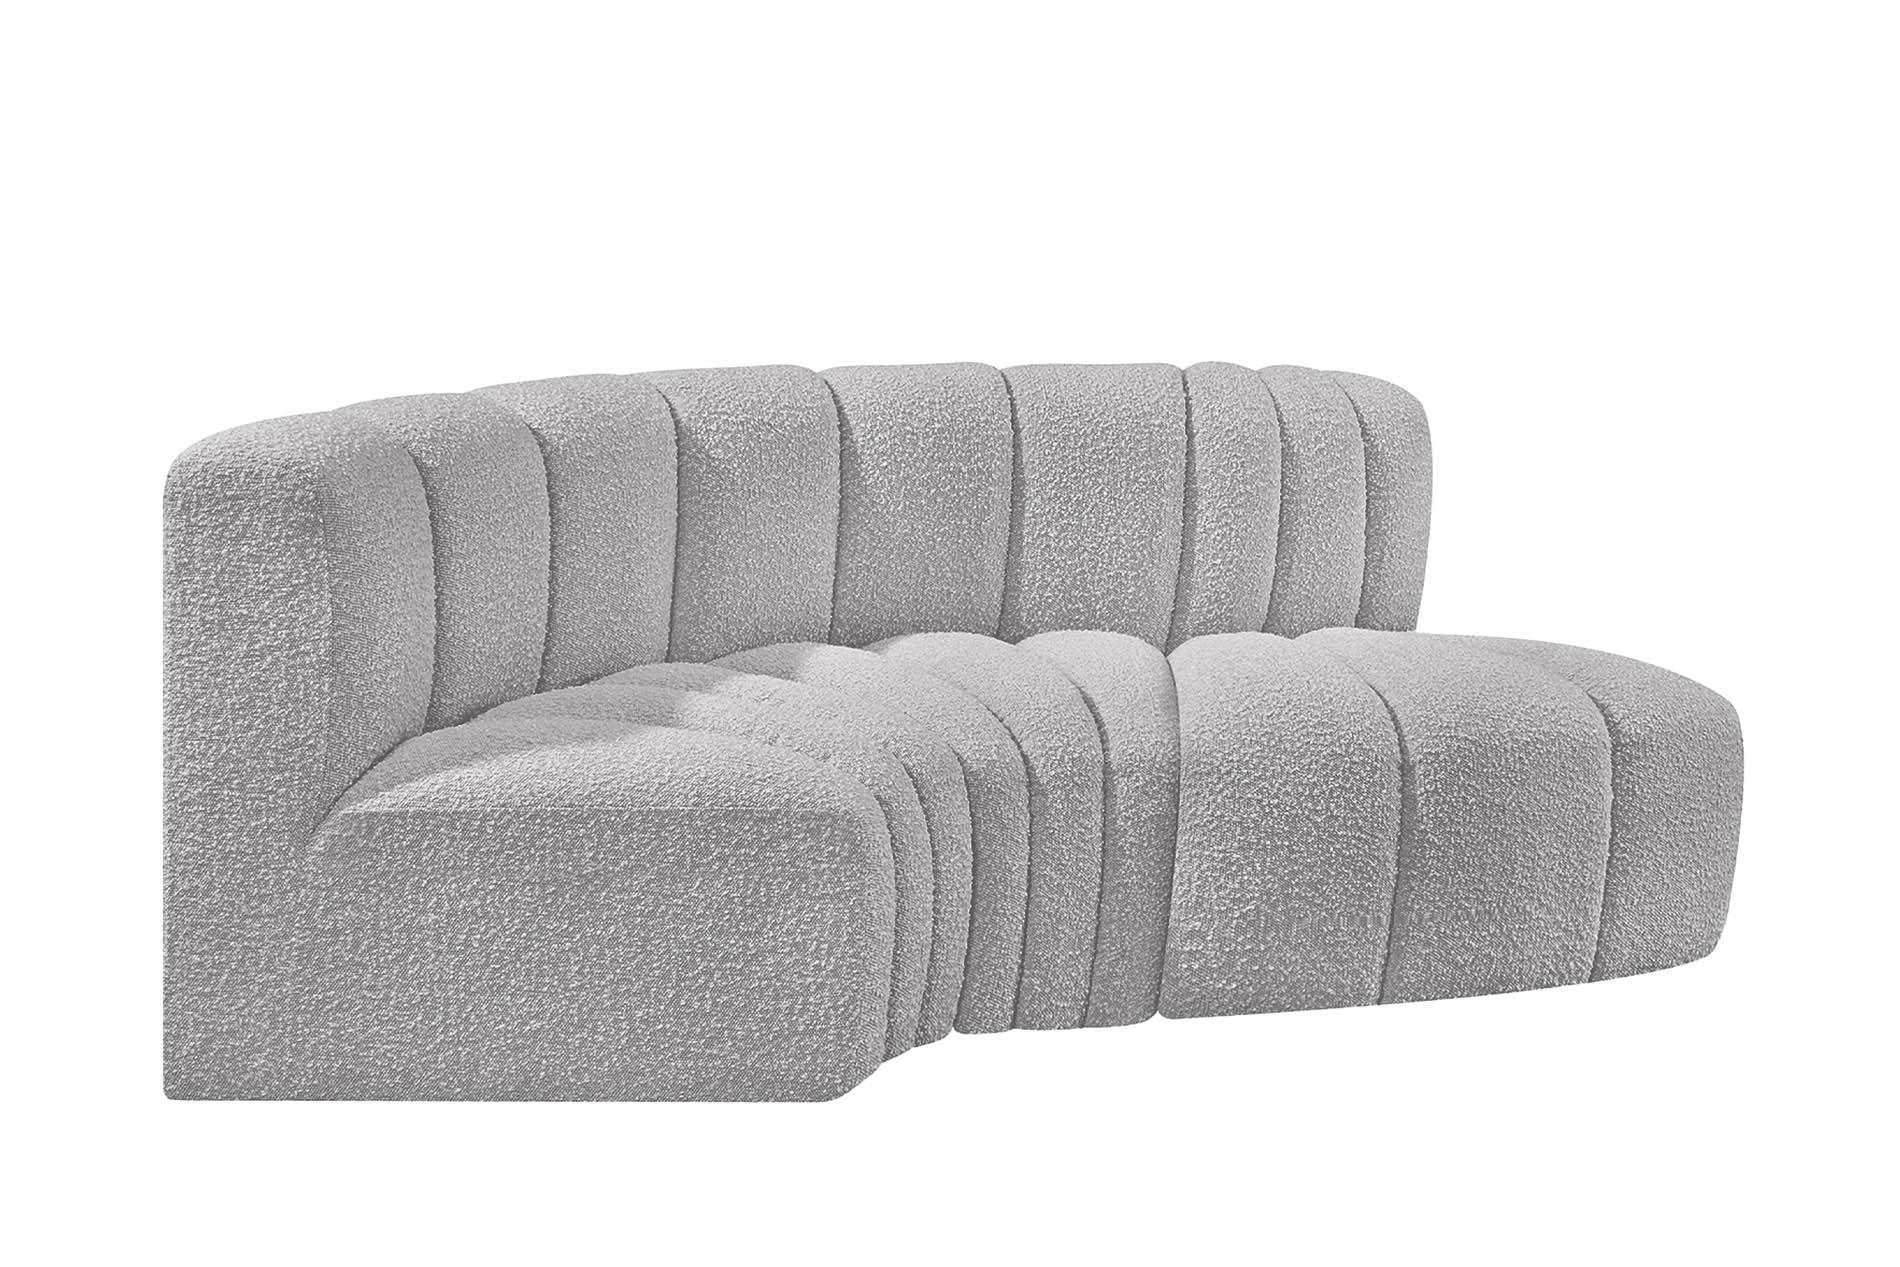 Contemporary, Modern Modular Sectional Sofa ARC 102Grey-S3D 102Grey-S3D in Gray 